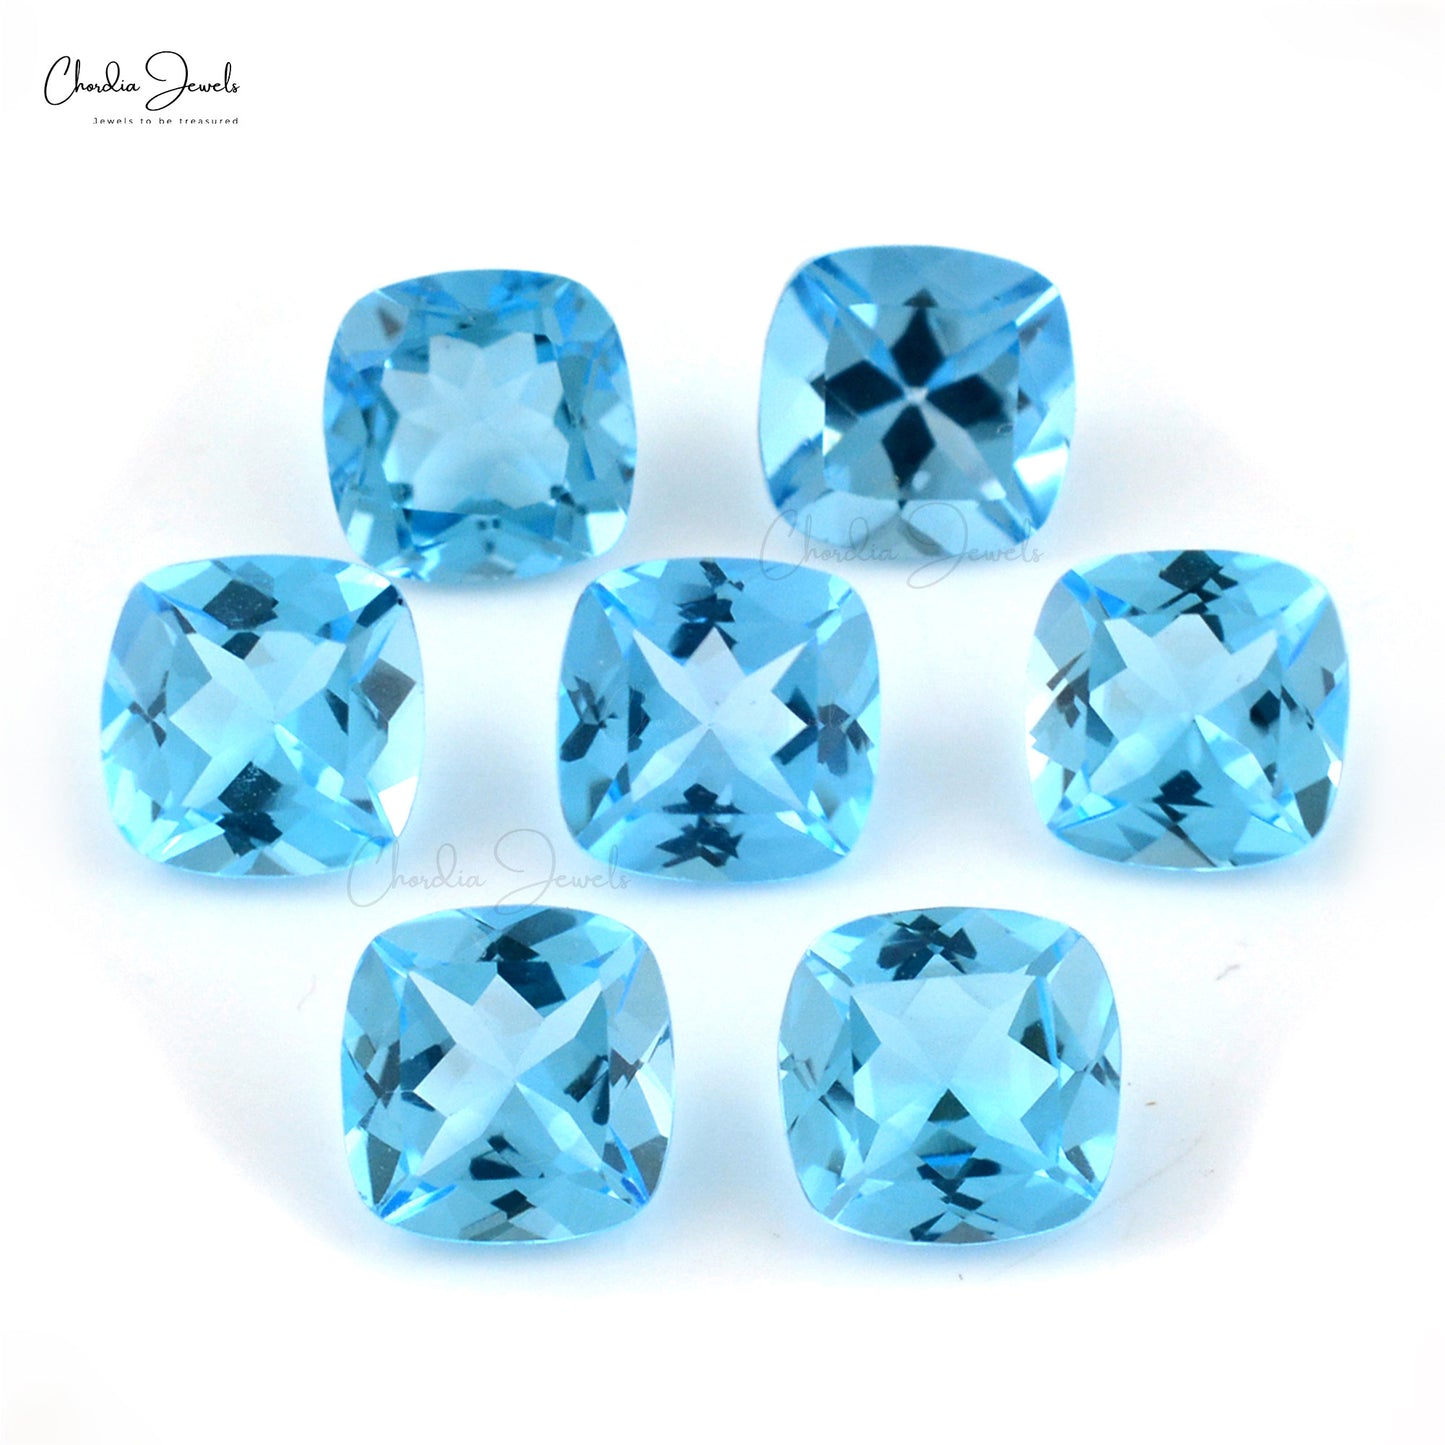 Natural Brazilian Blue Topaz 8MM Semi Precious Loose Gemstone at Discount Price, 1 Piece